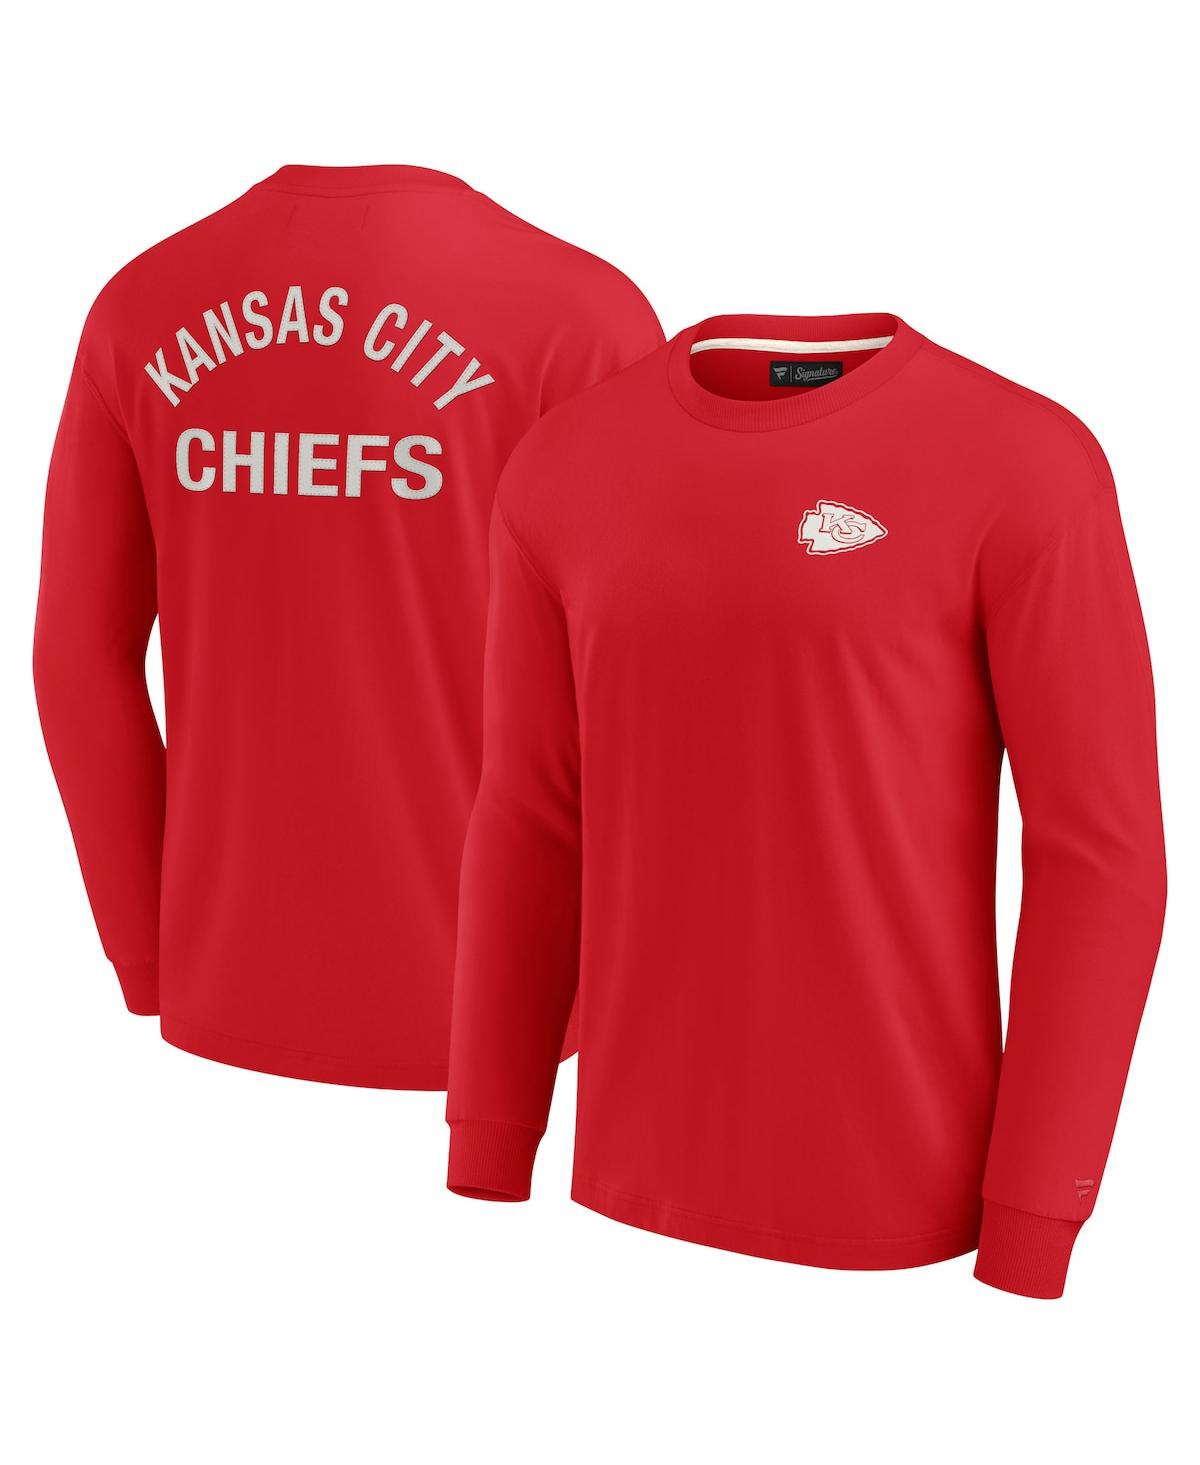 Men's and Women's Fanatics Signature Red Kansas City Chiefs Super Soft Long Sleeve T-shirt - Red